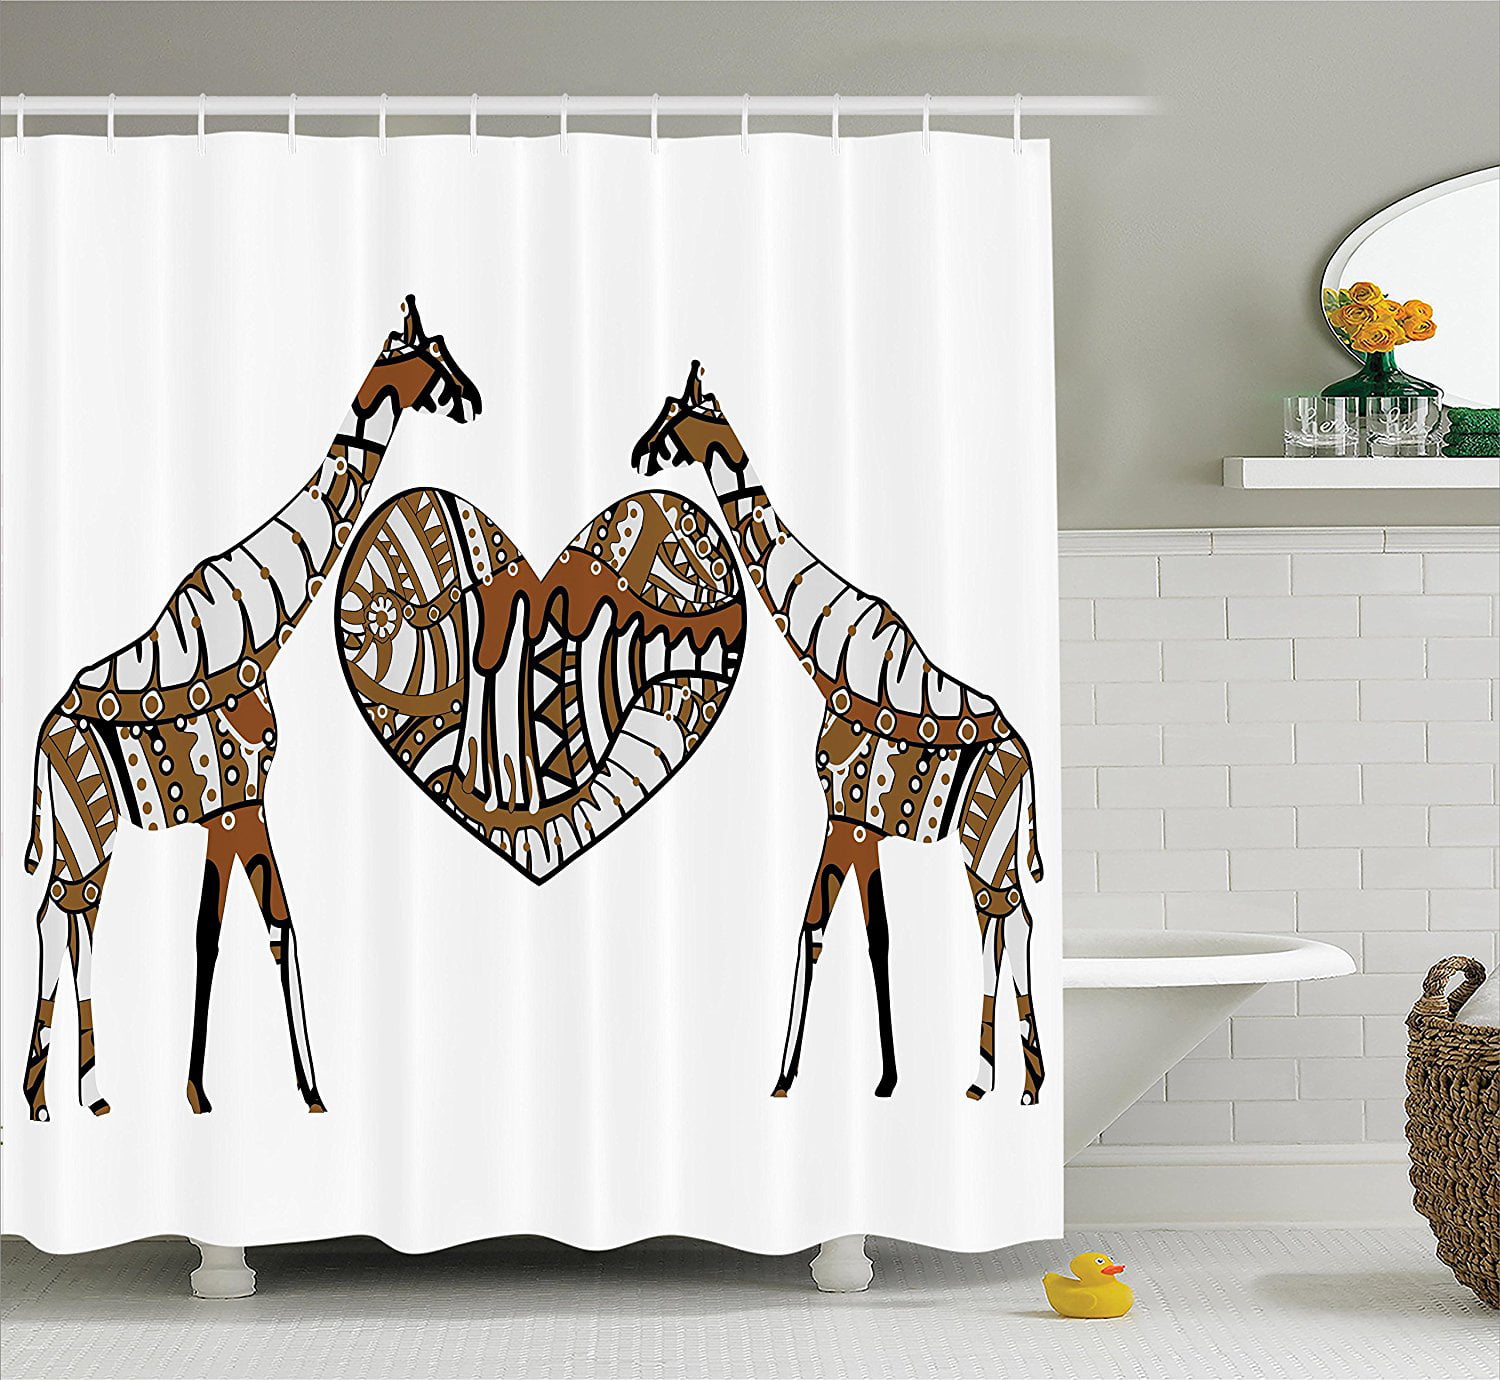 Details about   Bath Shower Curtain Cartoon Giraffe for Child Bathroom Set Mildew Resistance 